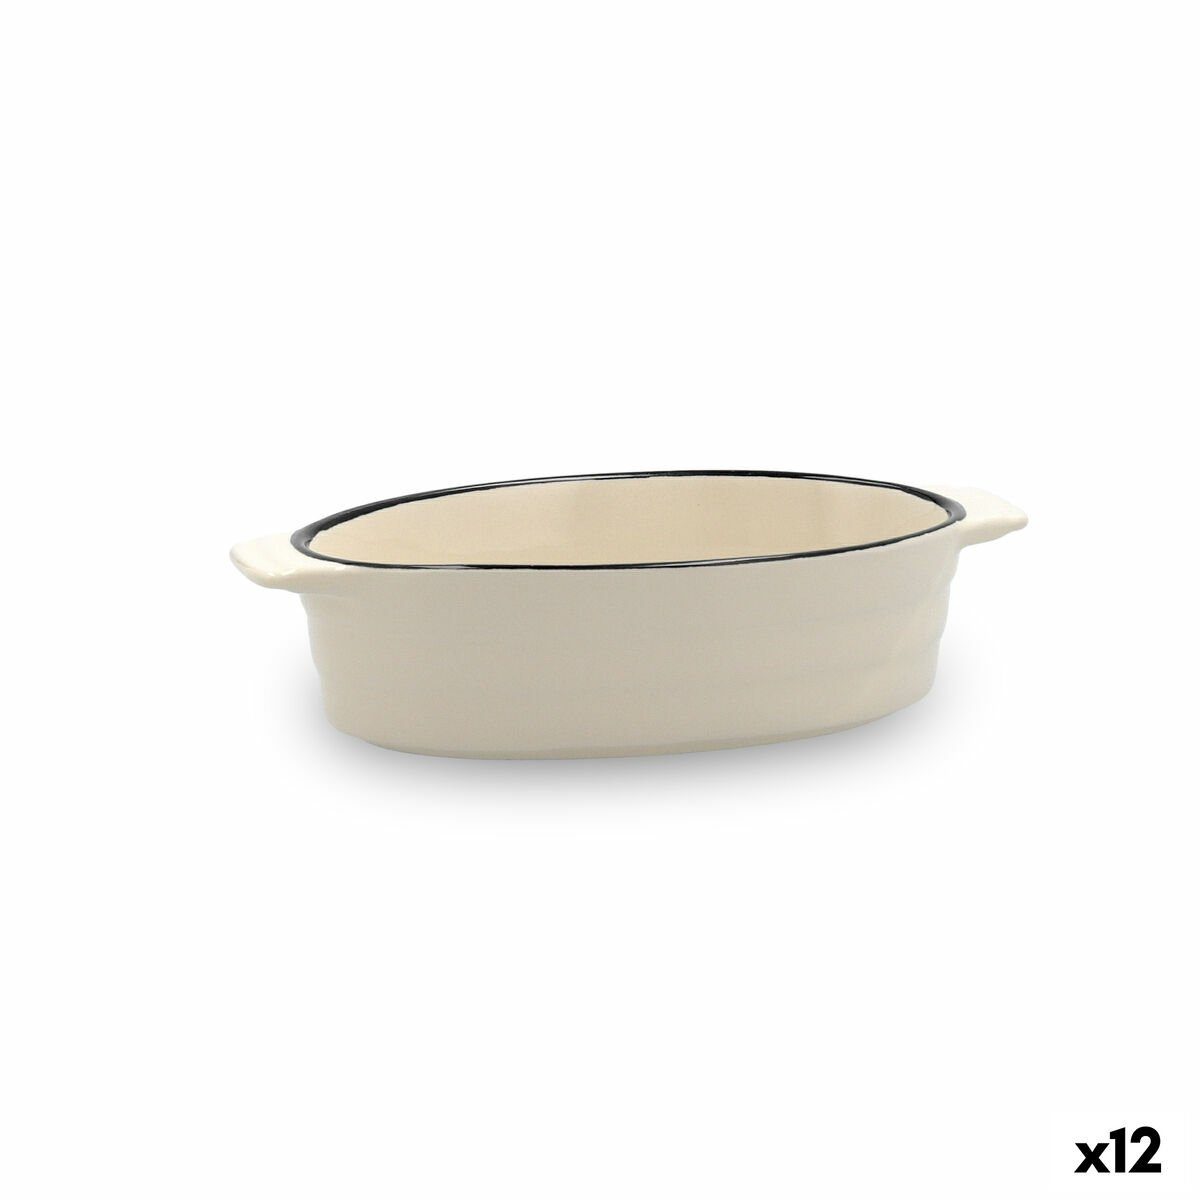 5 Keramik x Weiß 10,5 cm Kochtopf aus Pack 12x Quid Auflaufform x Keramik Cocco Au, 19 Quid Oval